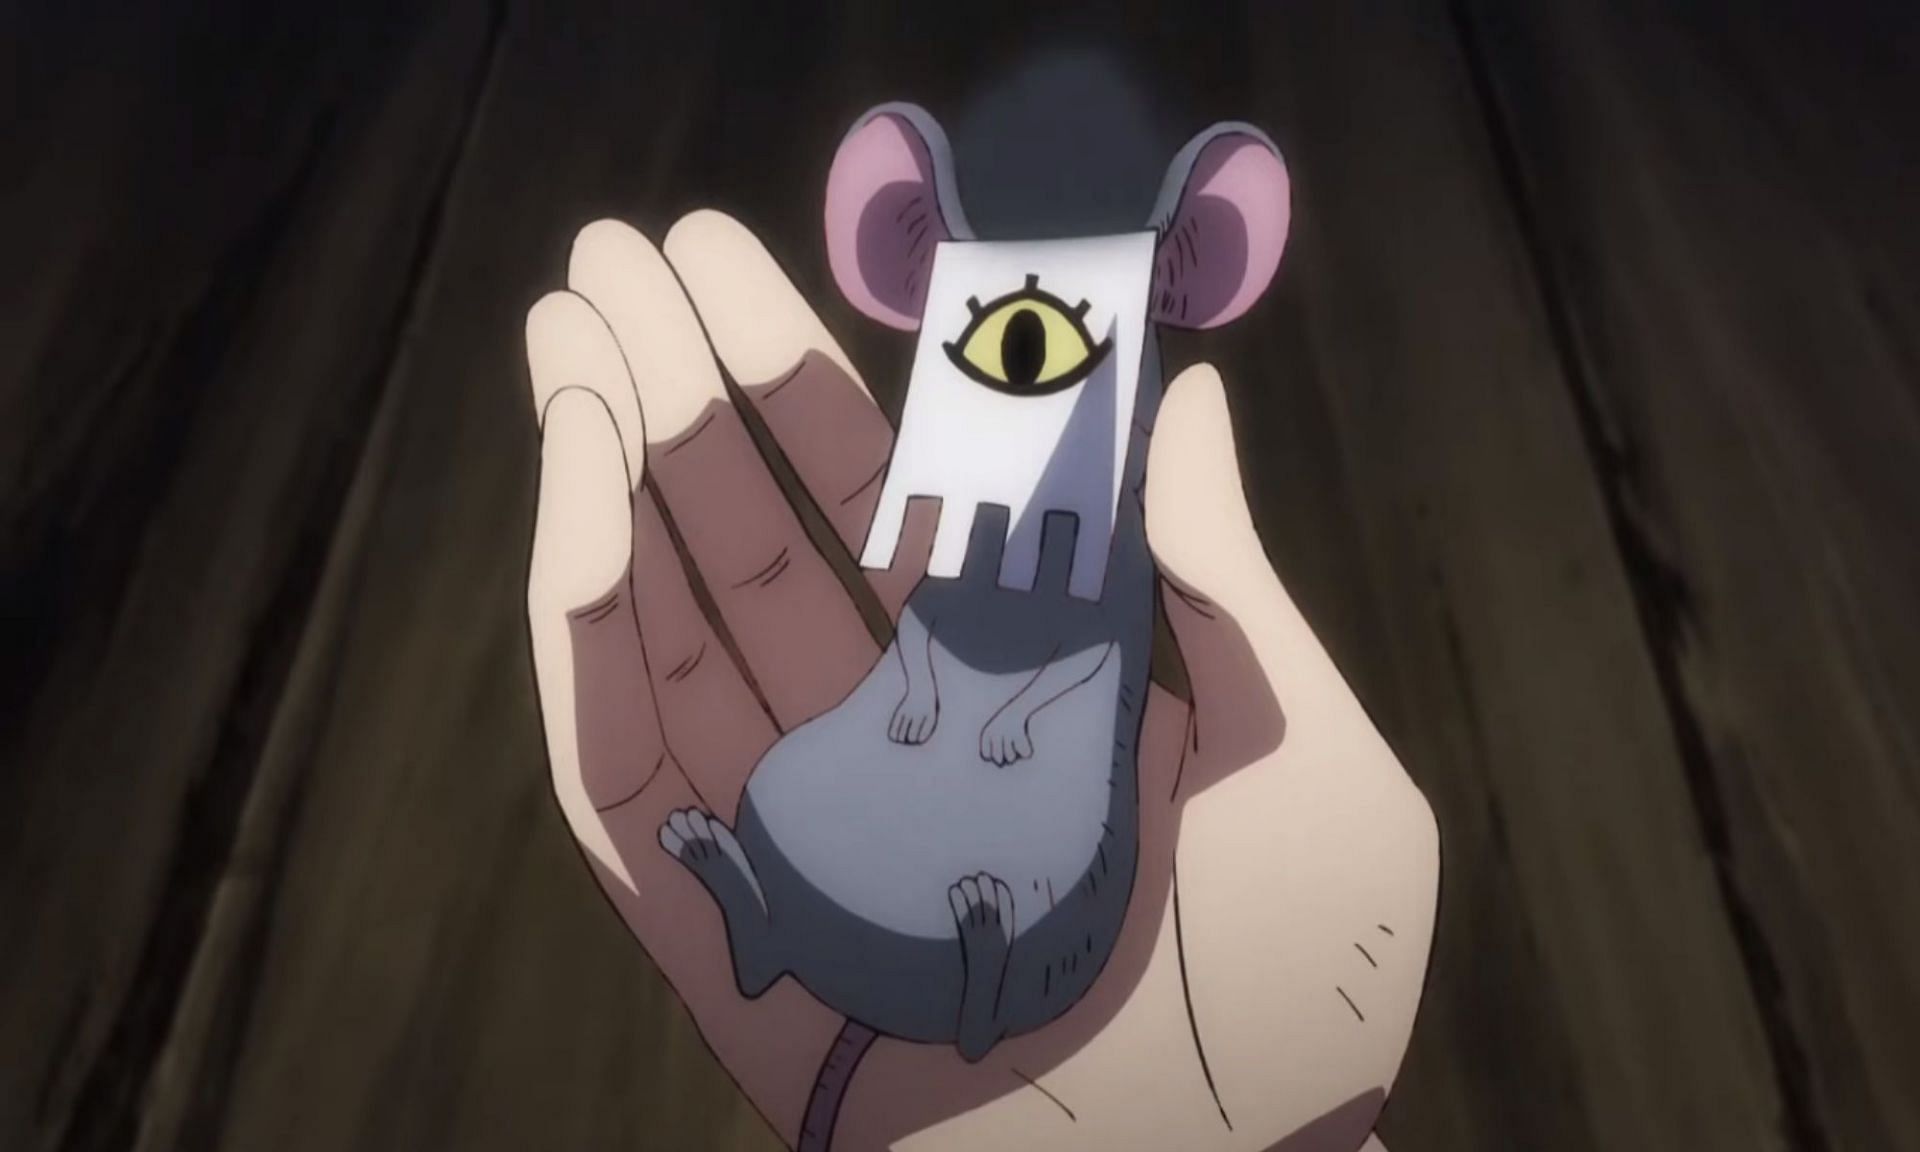 This mouse is also known as a Mary (Image via Eiichiro Oda/Shueisha/Viz Media/One Piece)